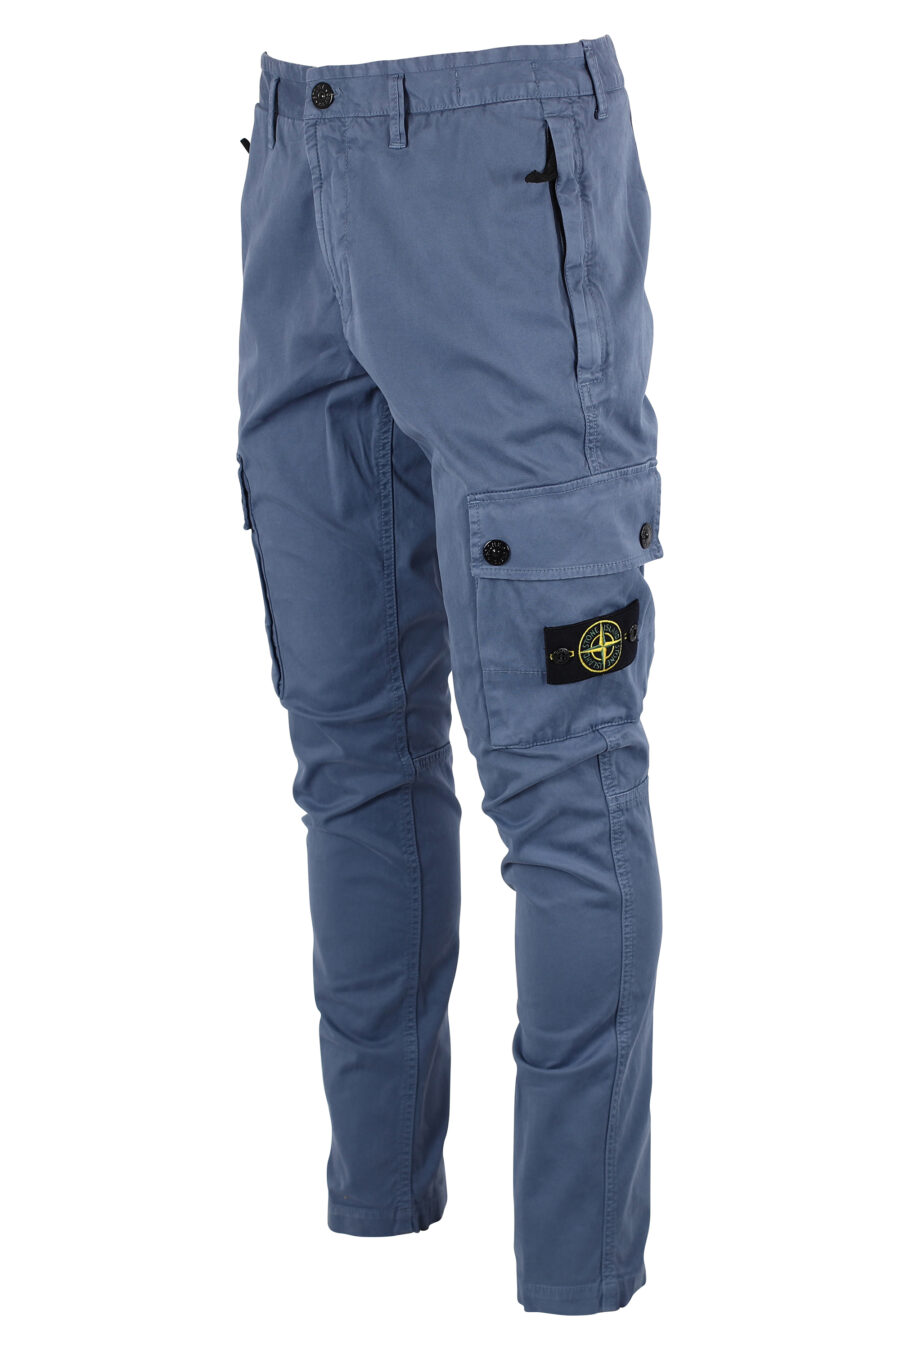 Pantalón azul grisáceo con bolsillos y parche lateral - IMG 8320